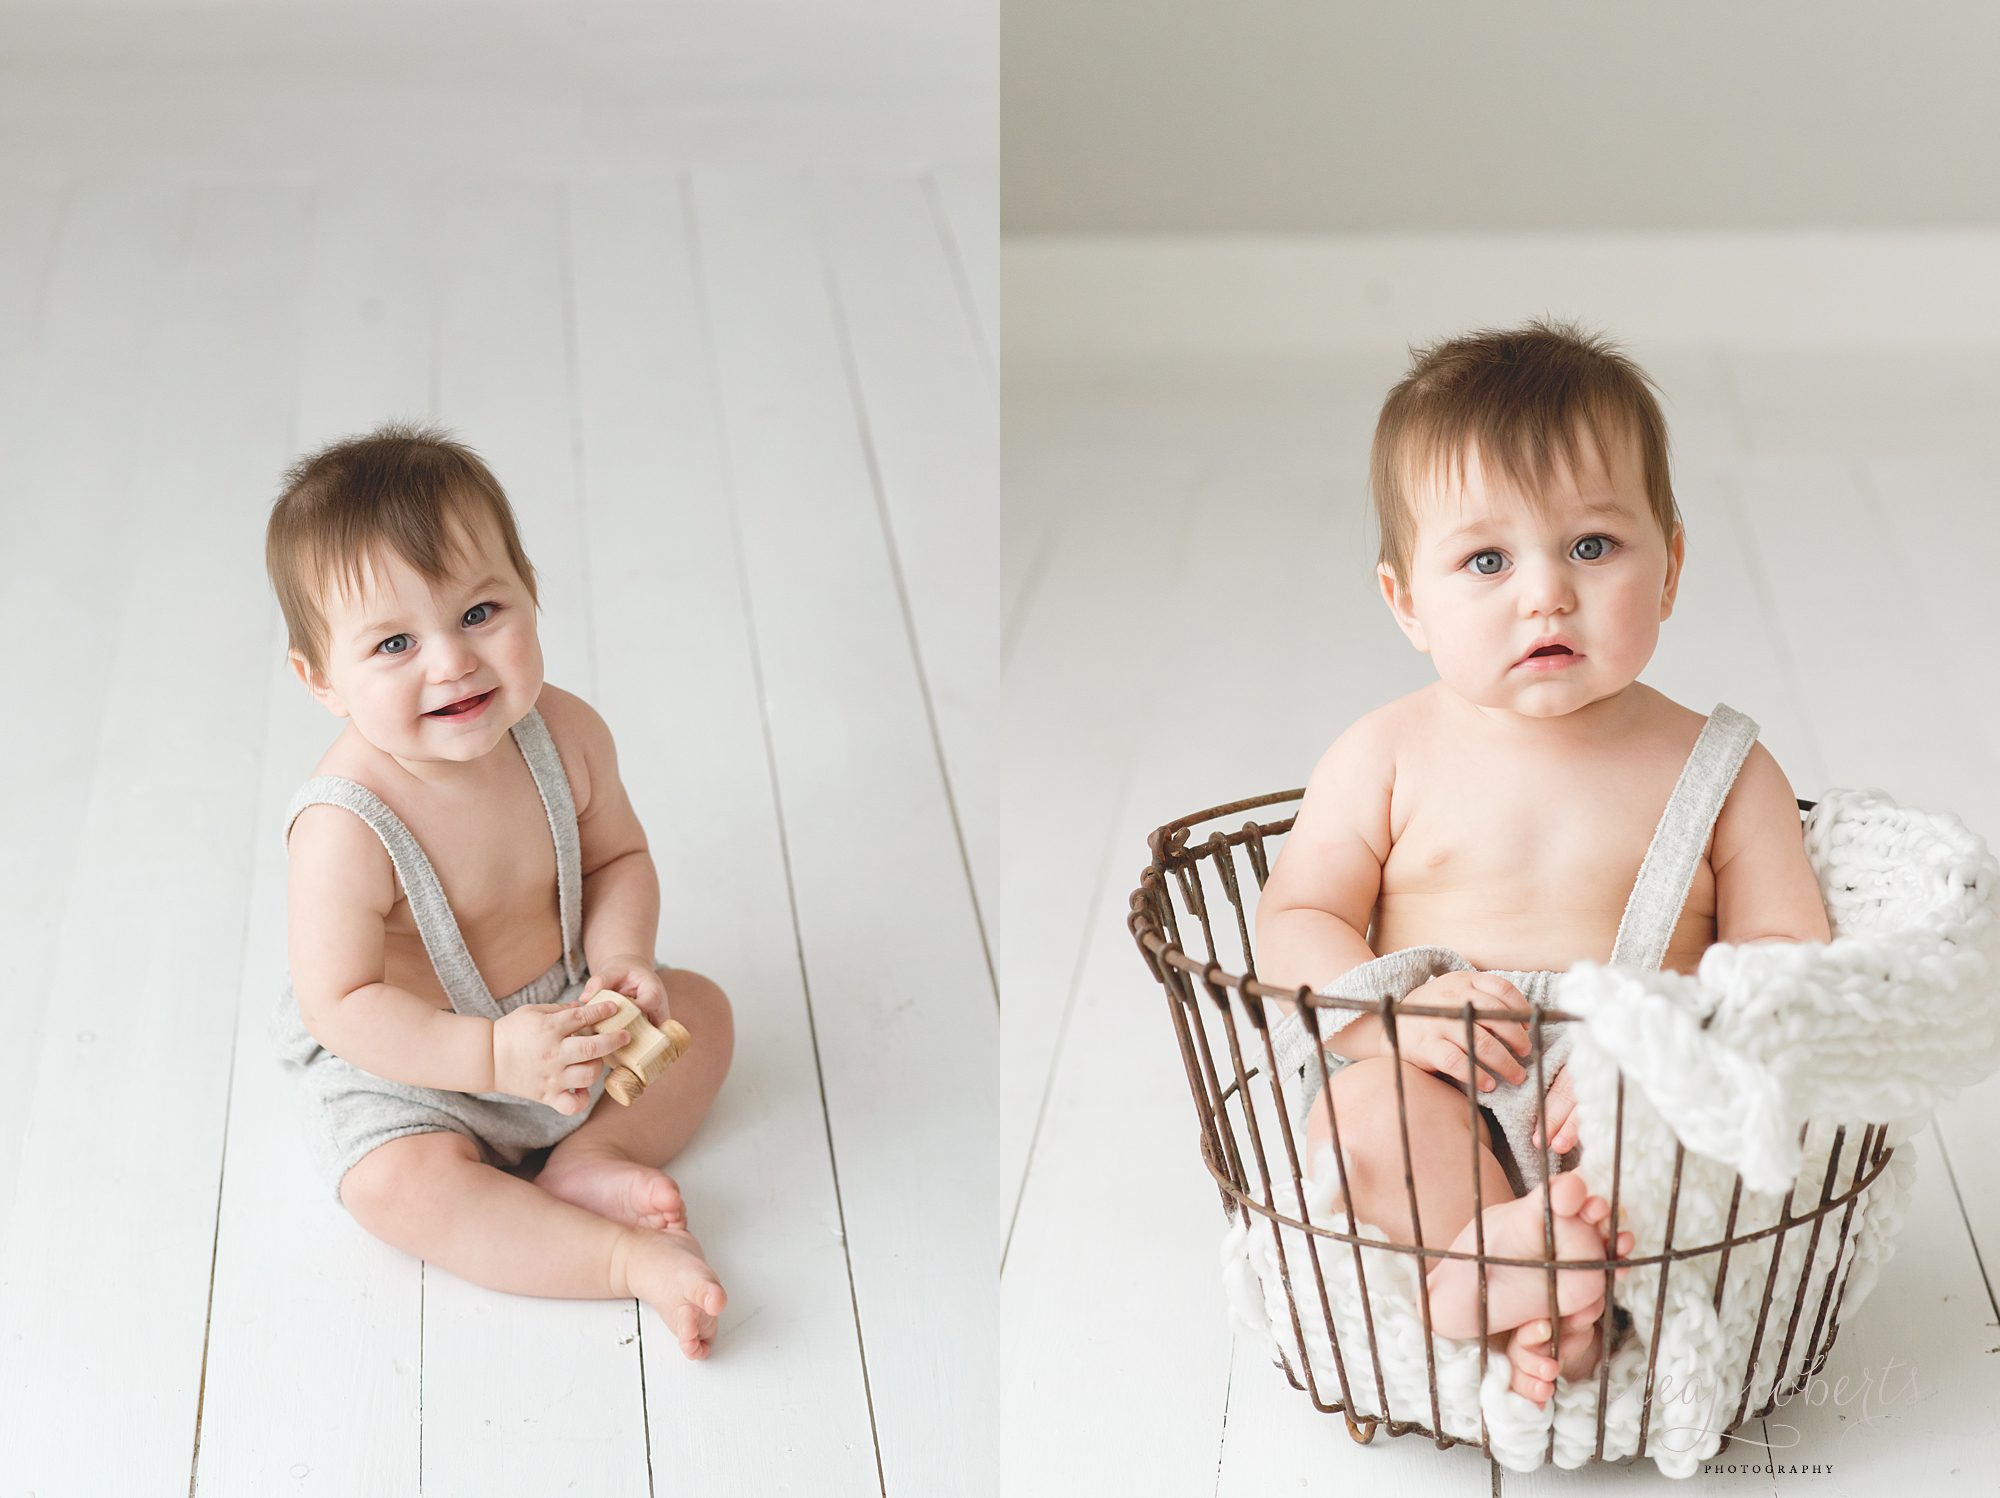 6 month baby boy sitting in basket | Reaj Roberts Photography 